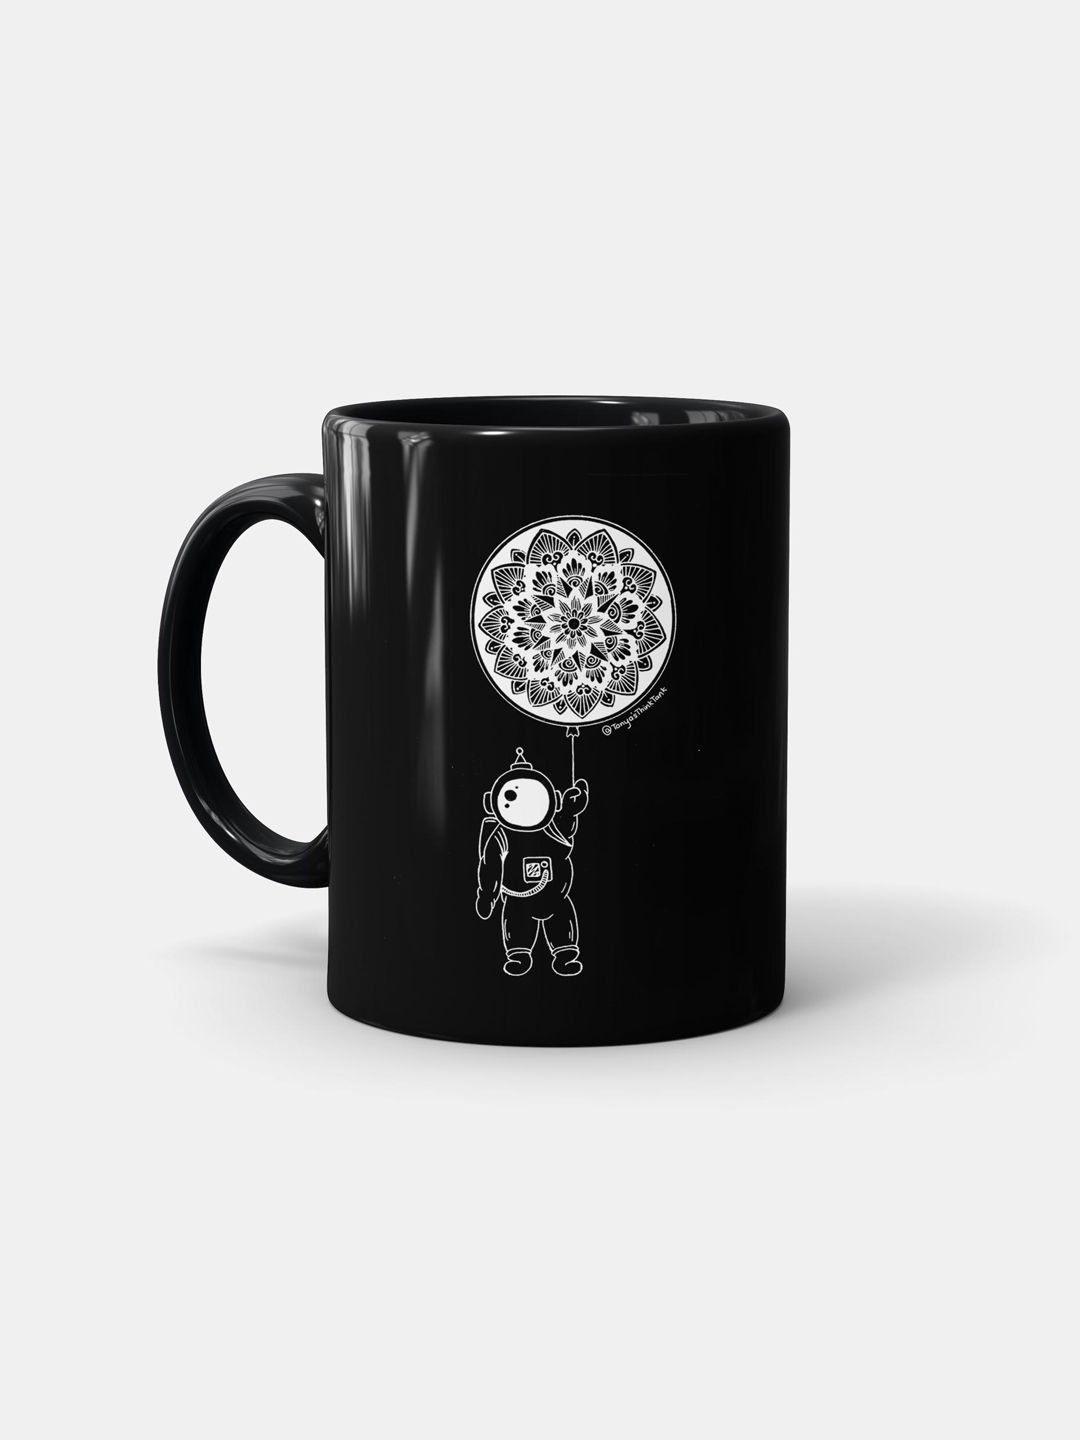 Buy Astronaut Black - Coffee Mugs Black Coffee Mugs Online